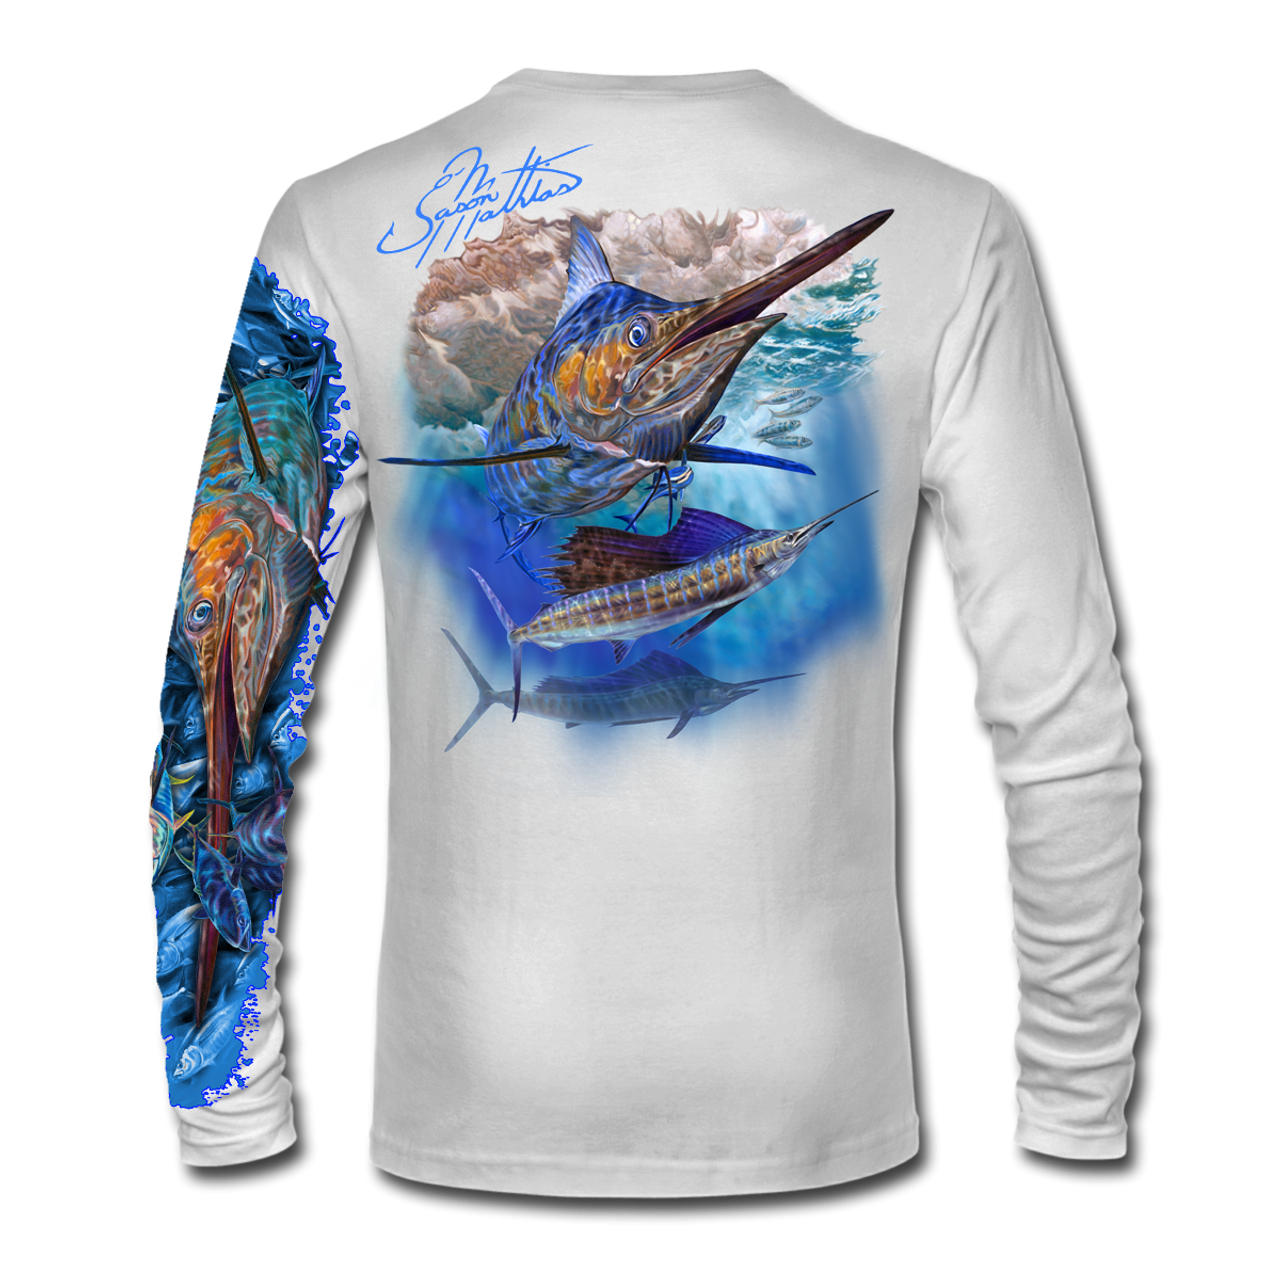 LS High Performance tee shirt (Marlin Sailfish)